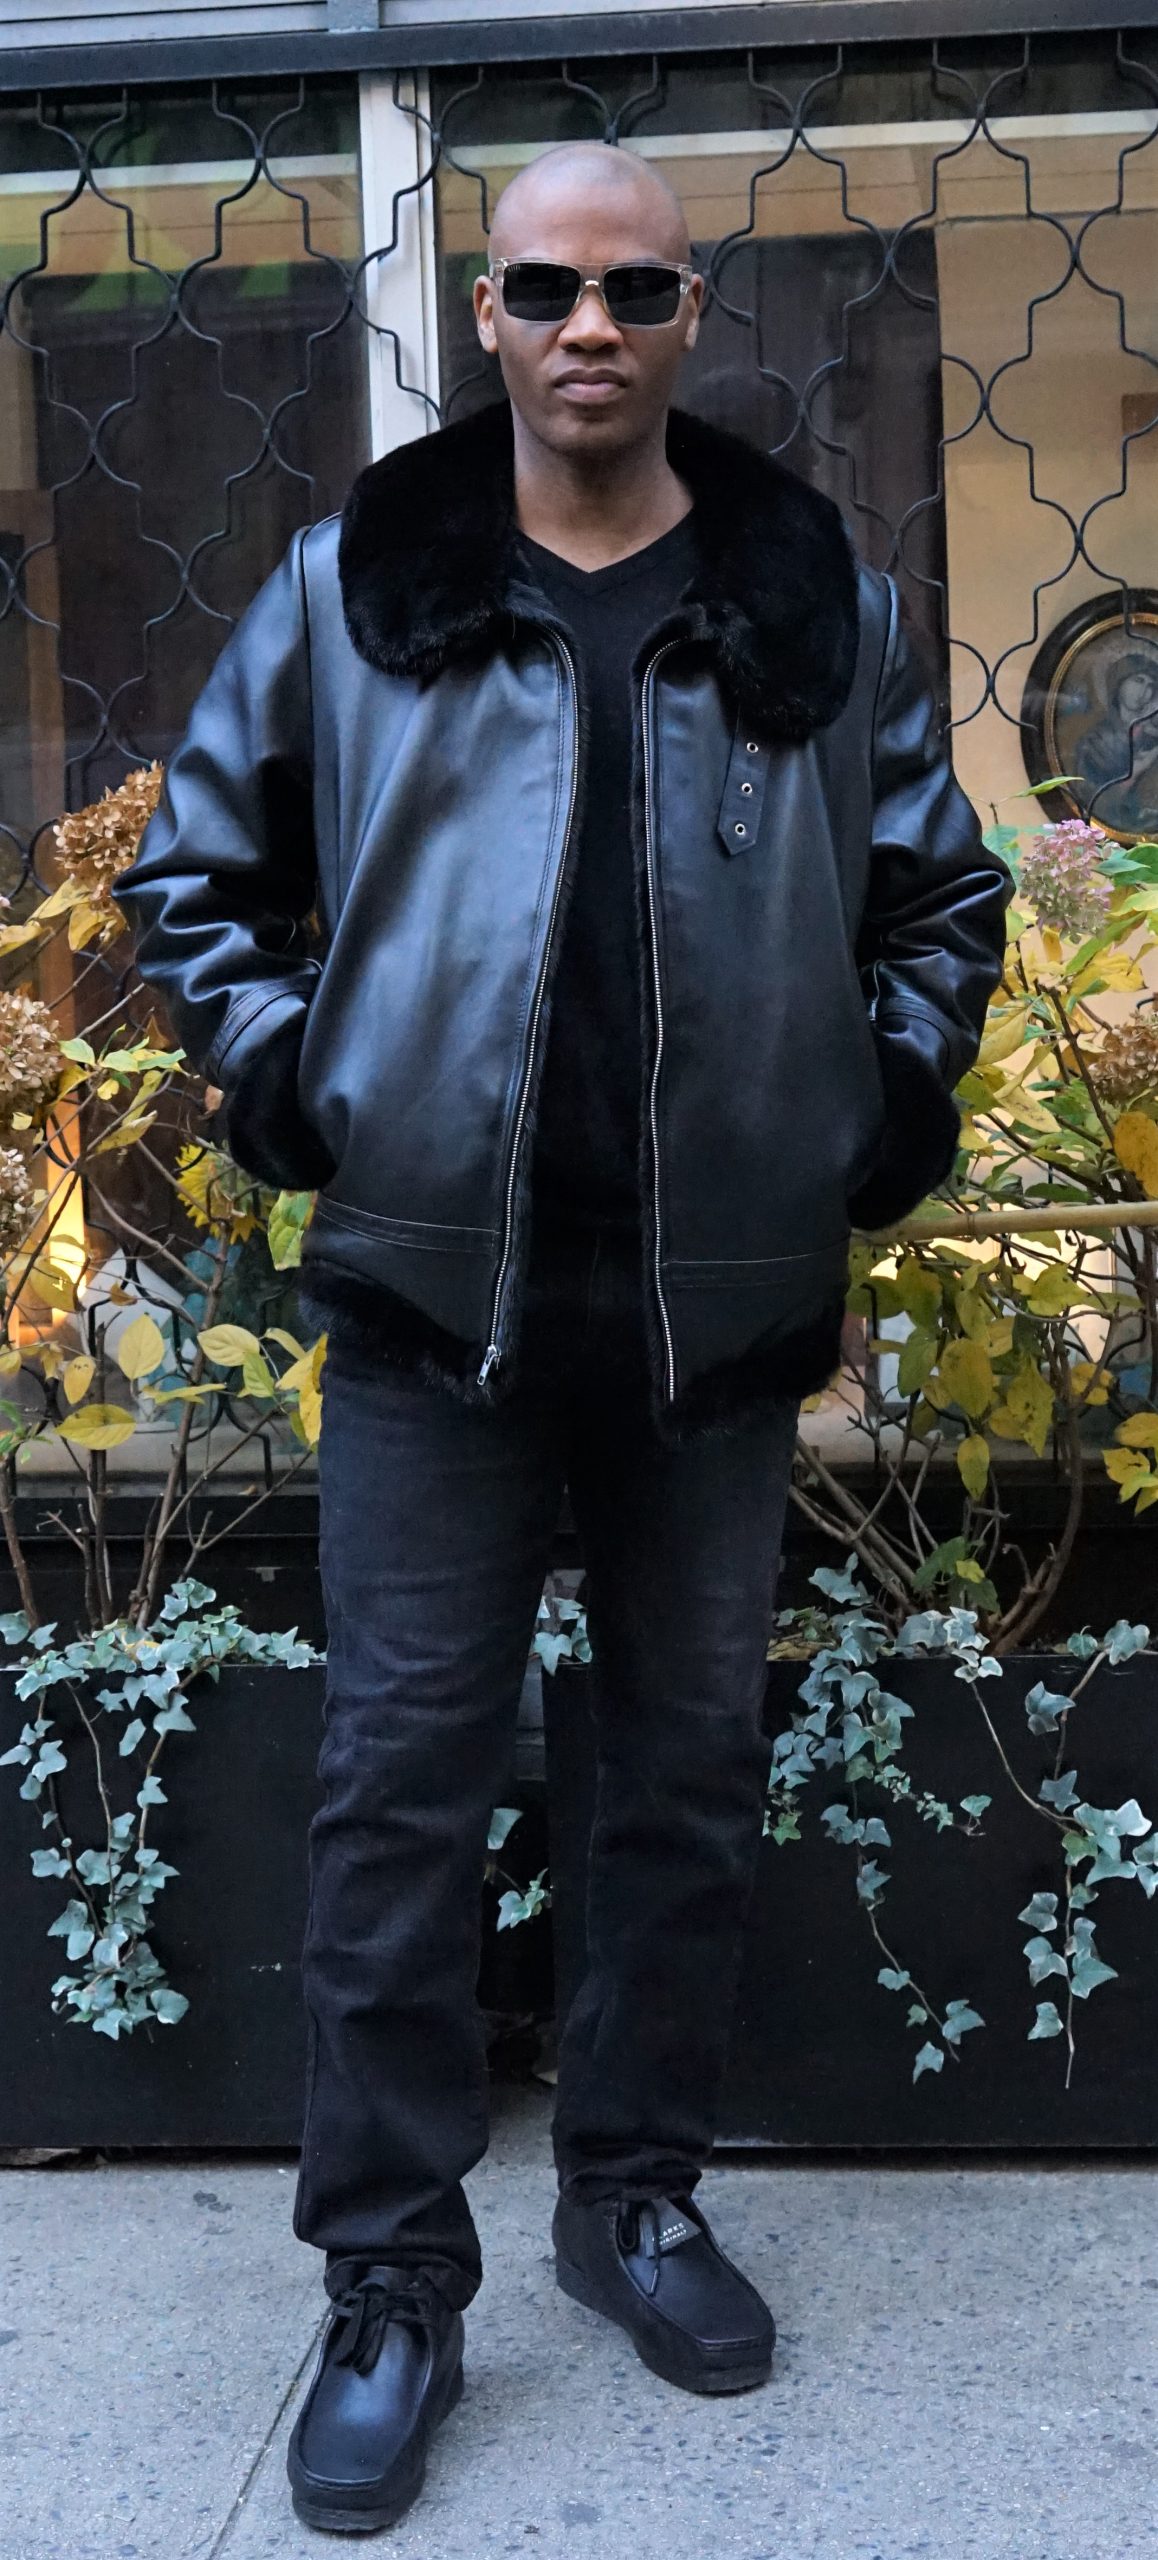 Men's Black leather Jacket Fully Lined in Mink